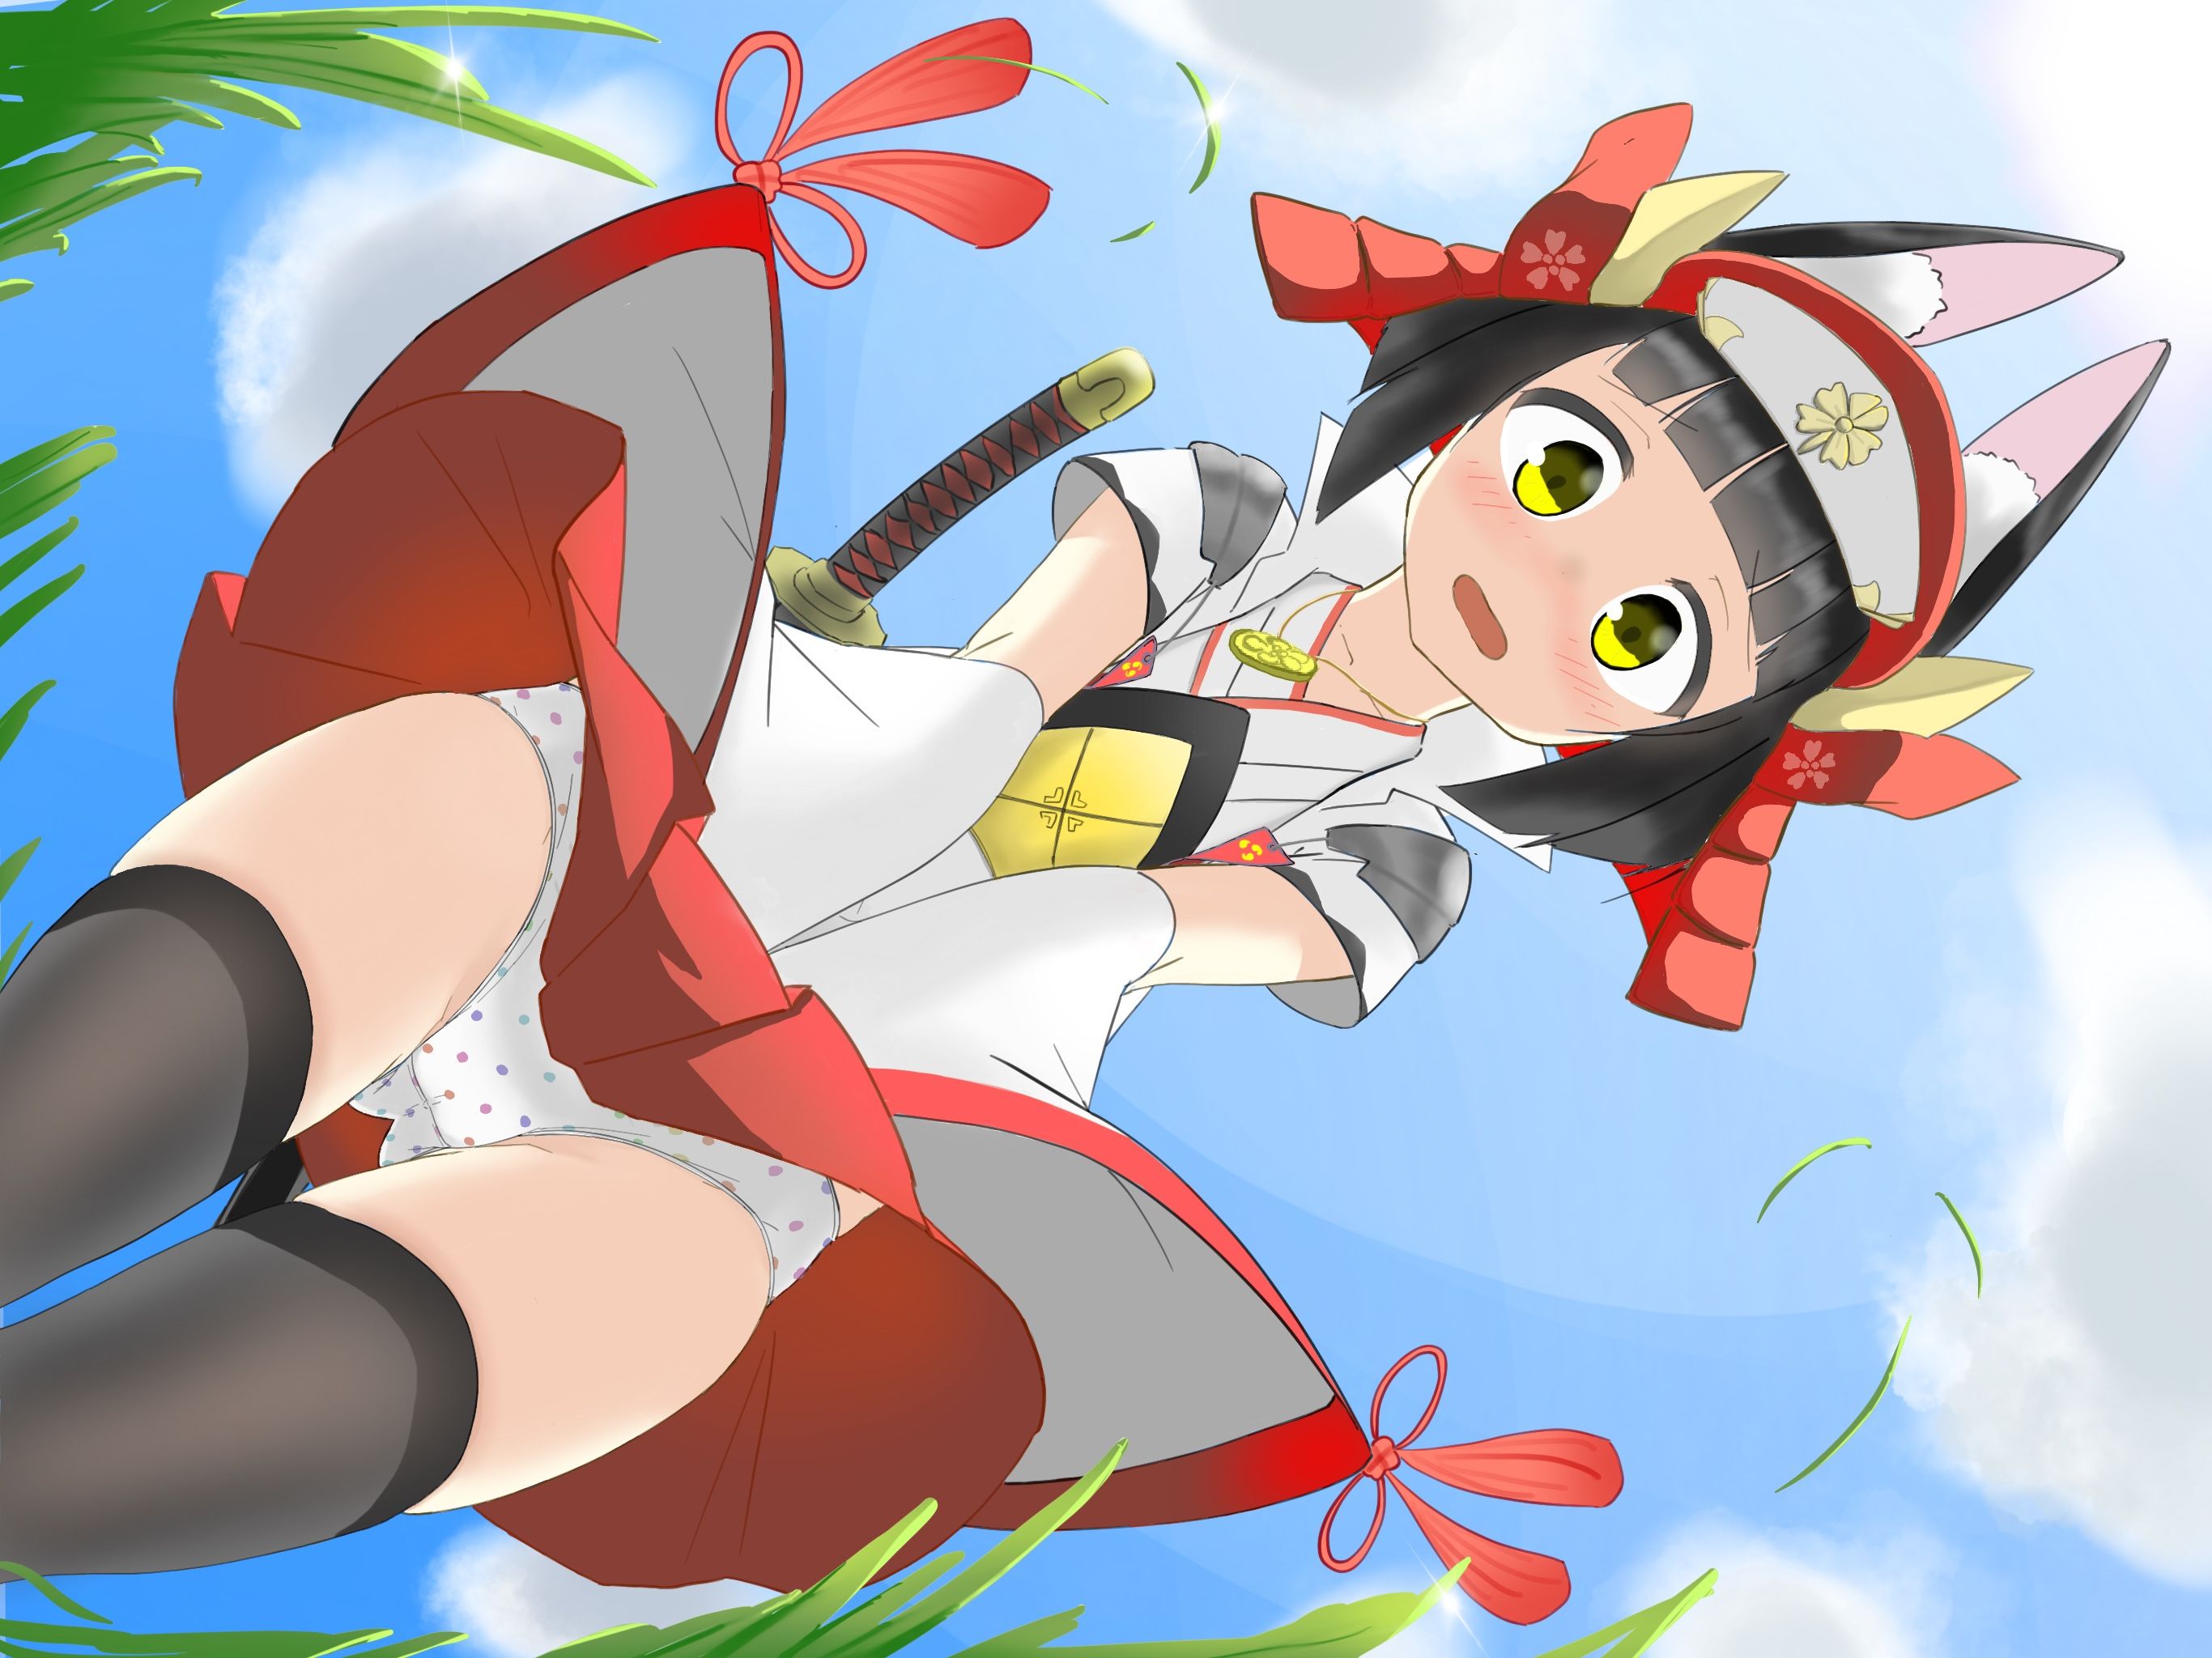 【Mutsu-chan (Azulen)】Secondary erotic image of Azur Lane's black-haired short heavy cherry blossom loli priestess sister ship Mutsu-chan 16